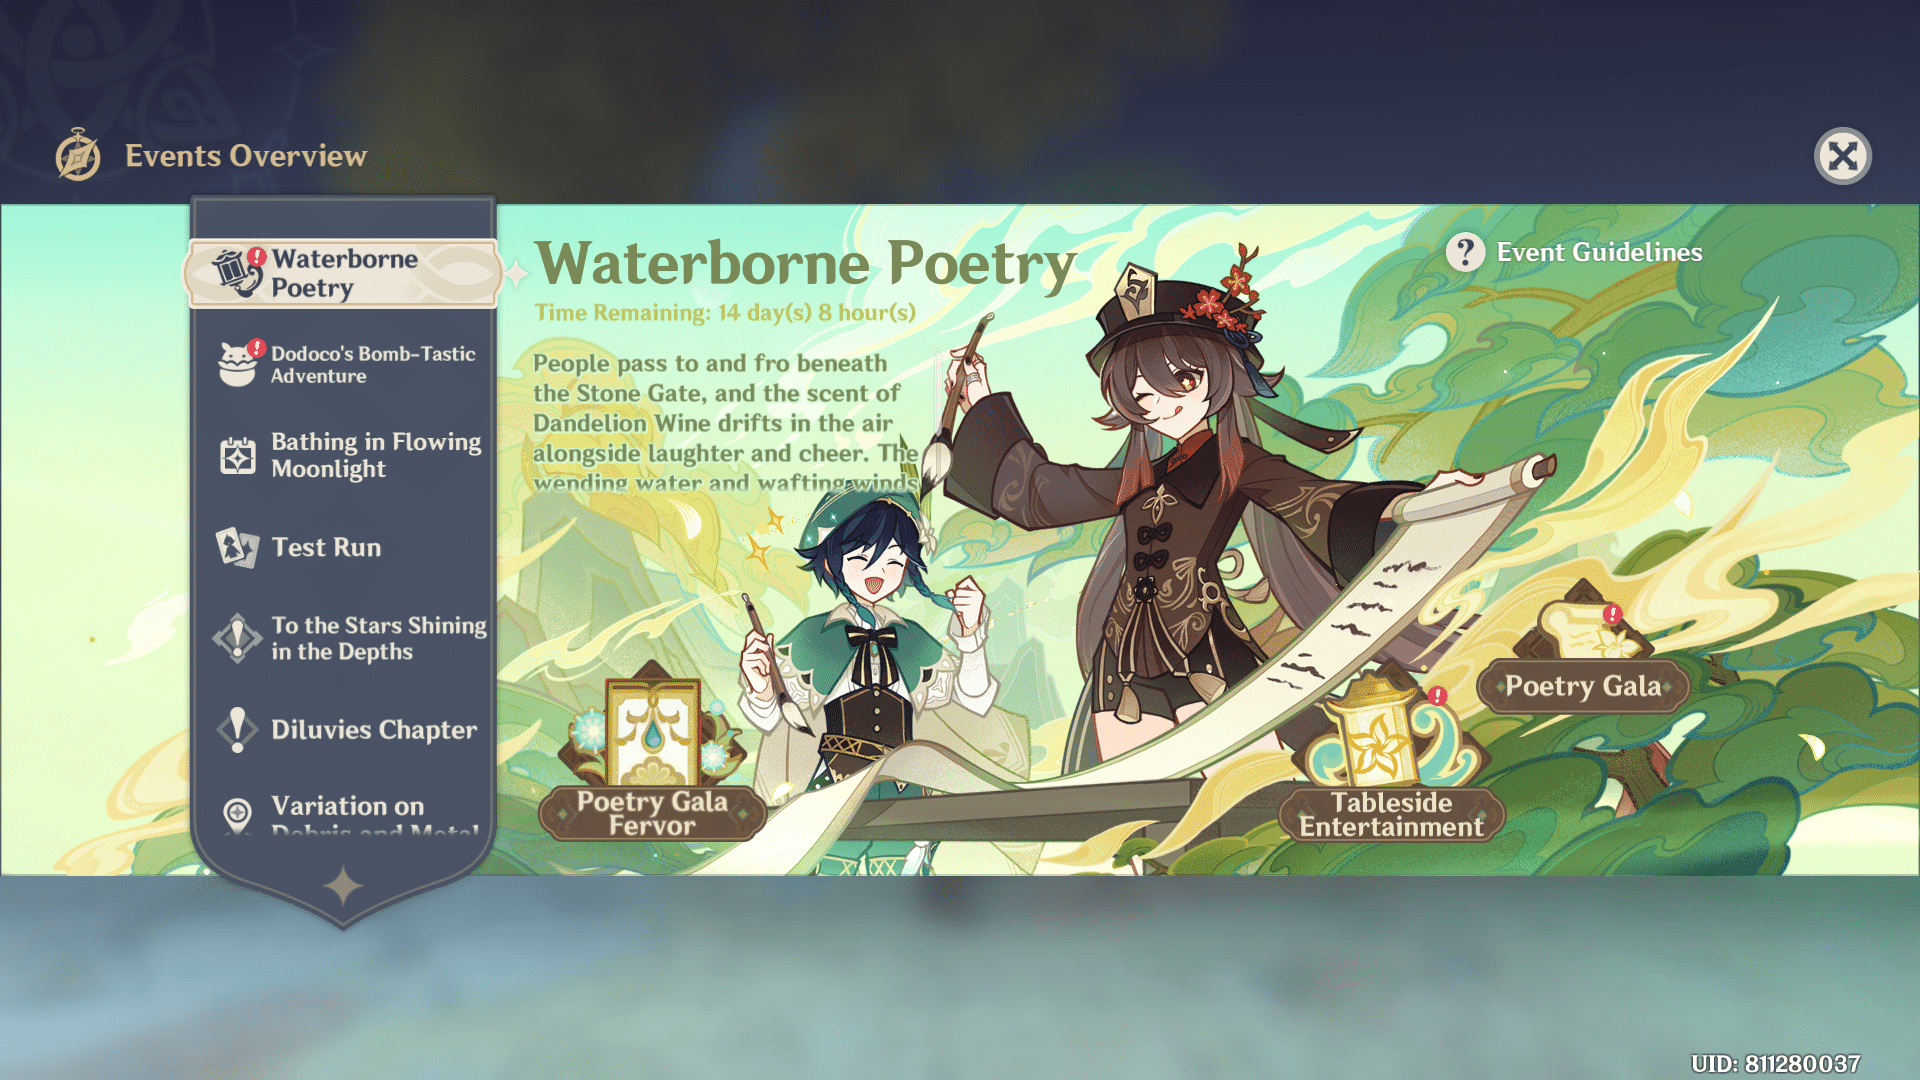 Waterborne Poetry Event